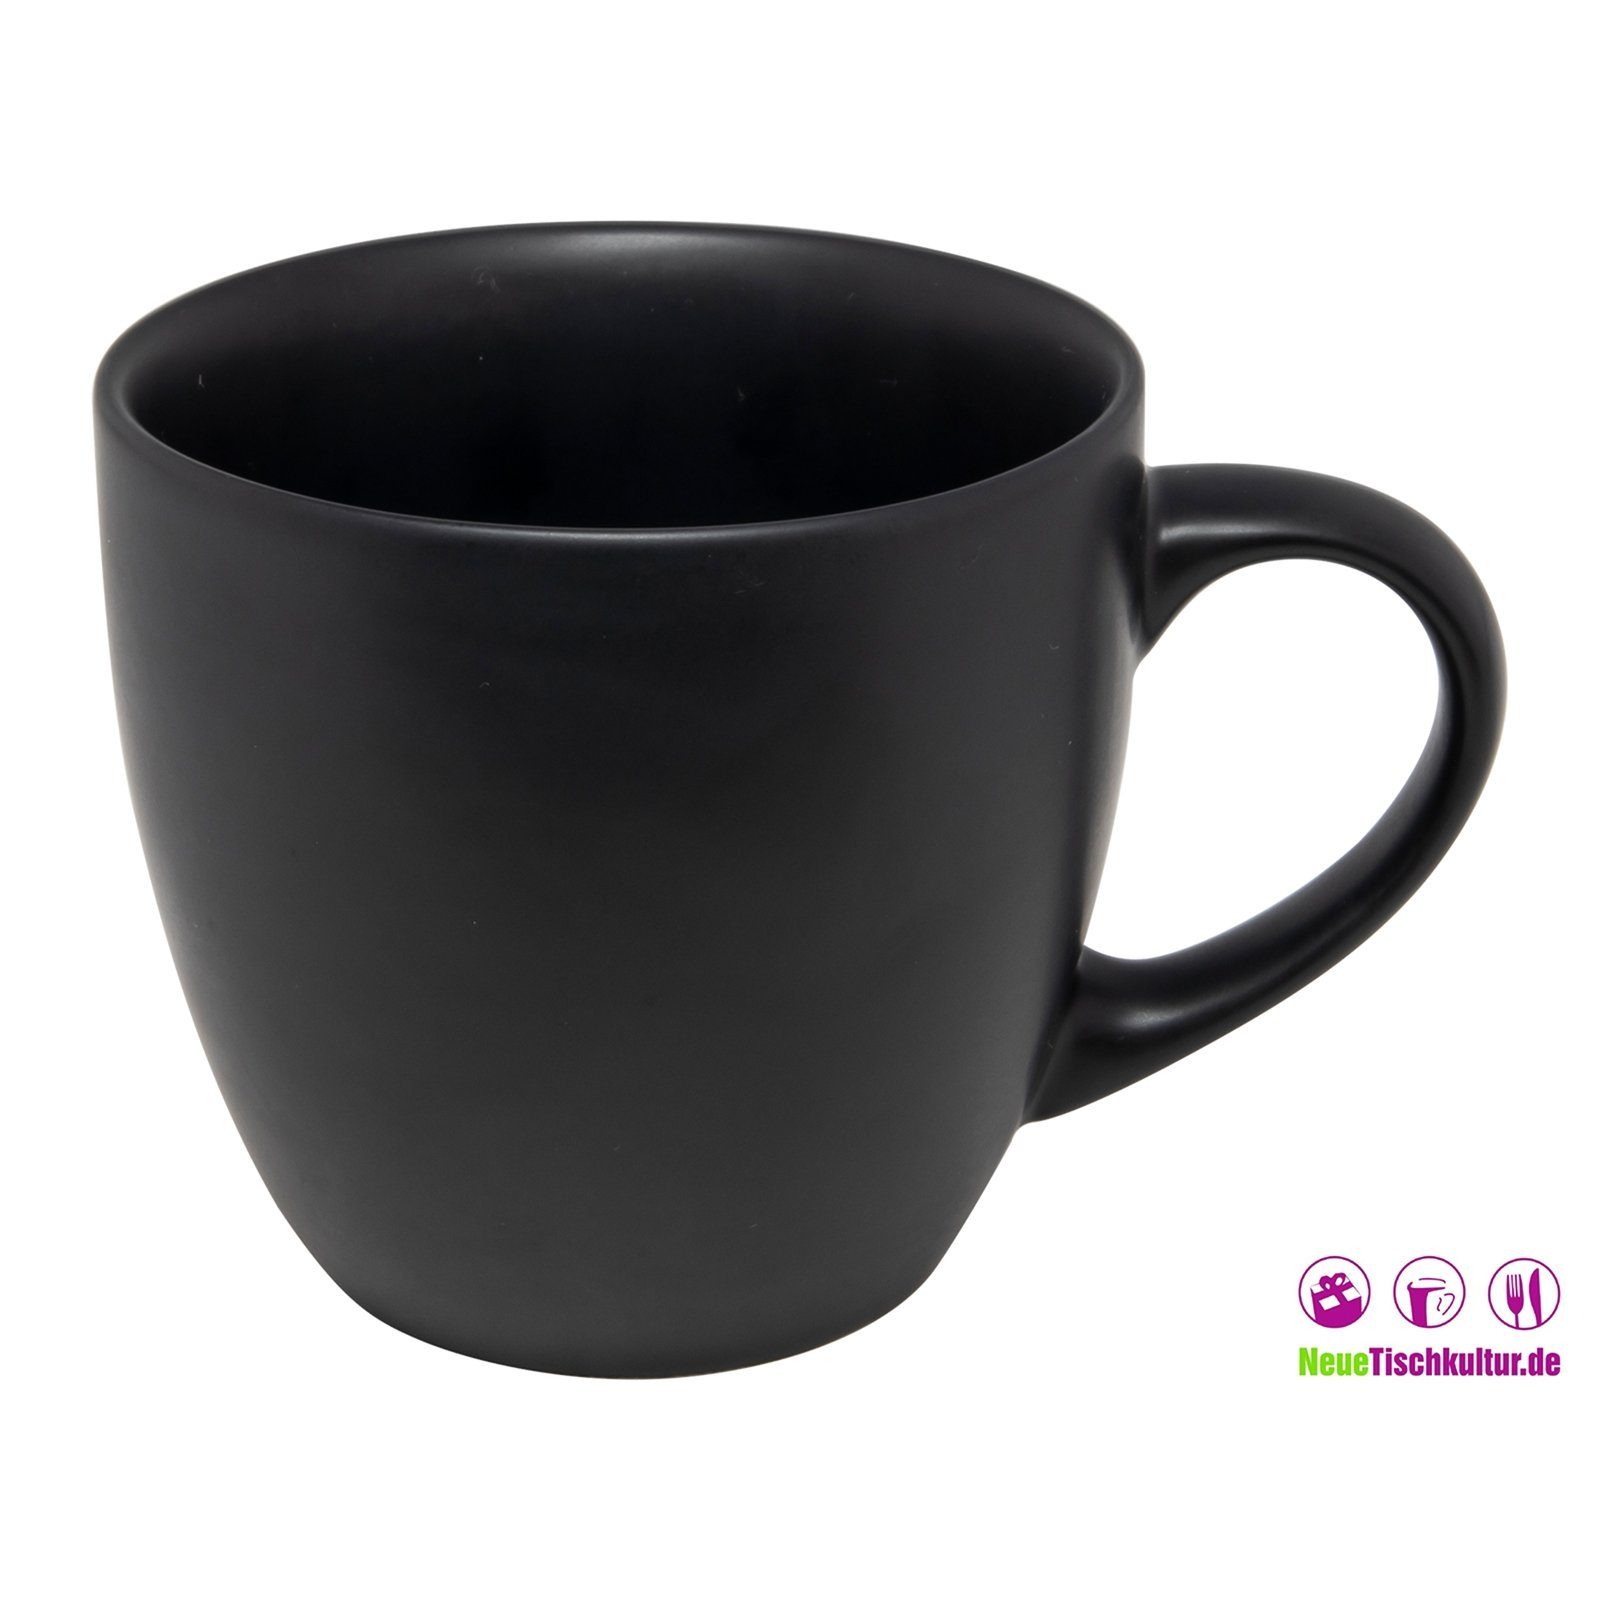 Neuetischkultur Tasse Tasse 4 er Matt, Kaffeetasse Teetasse Set Black Keramik